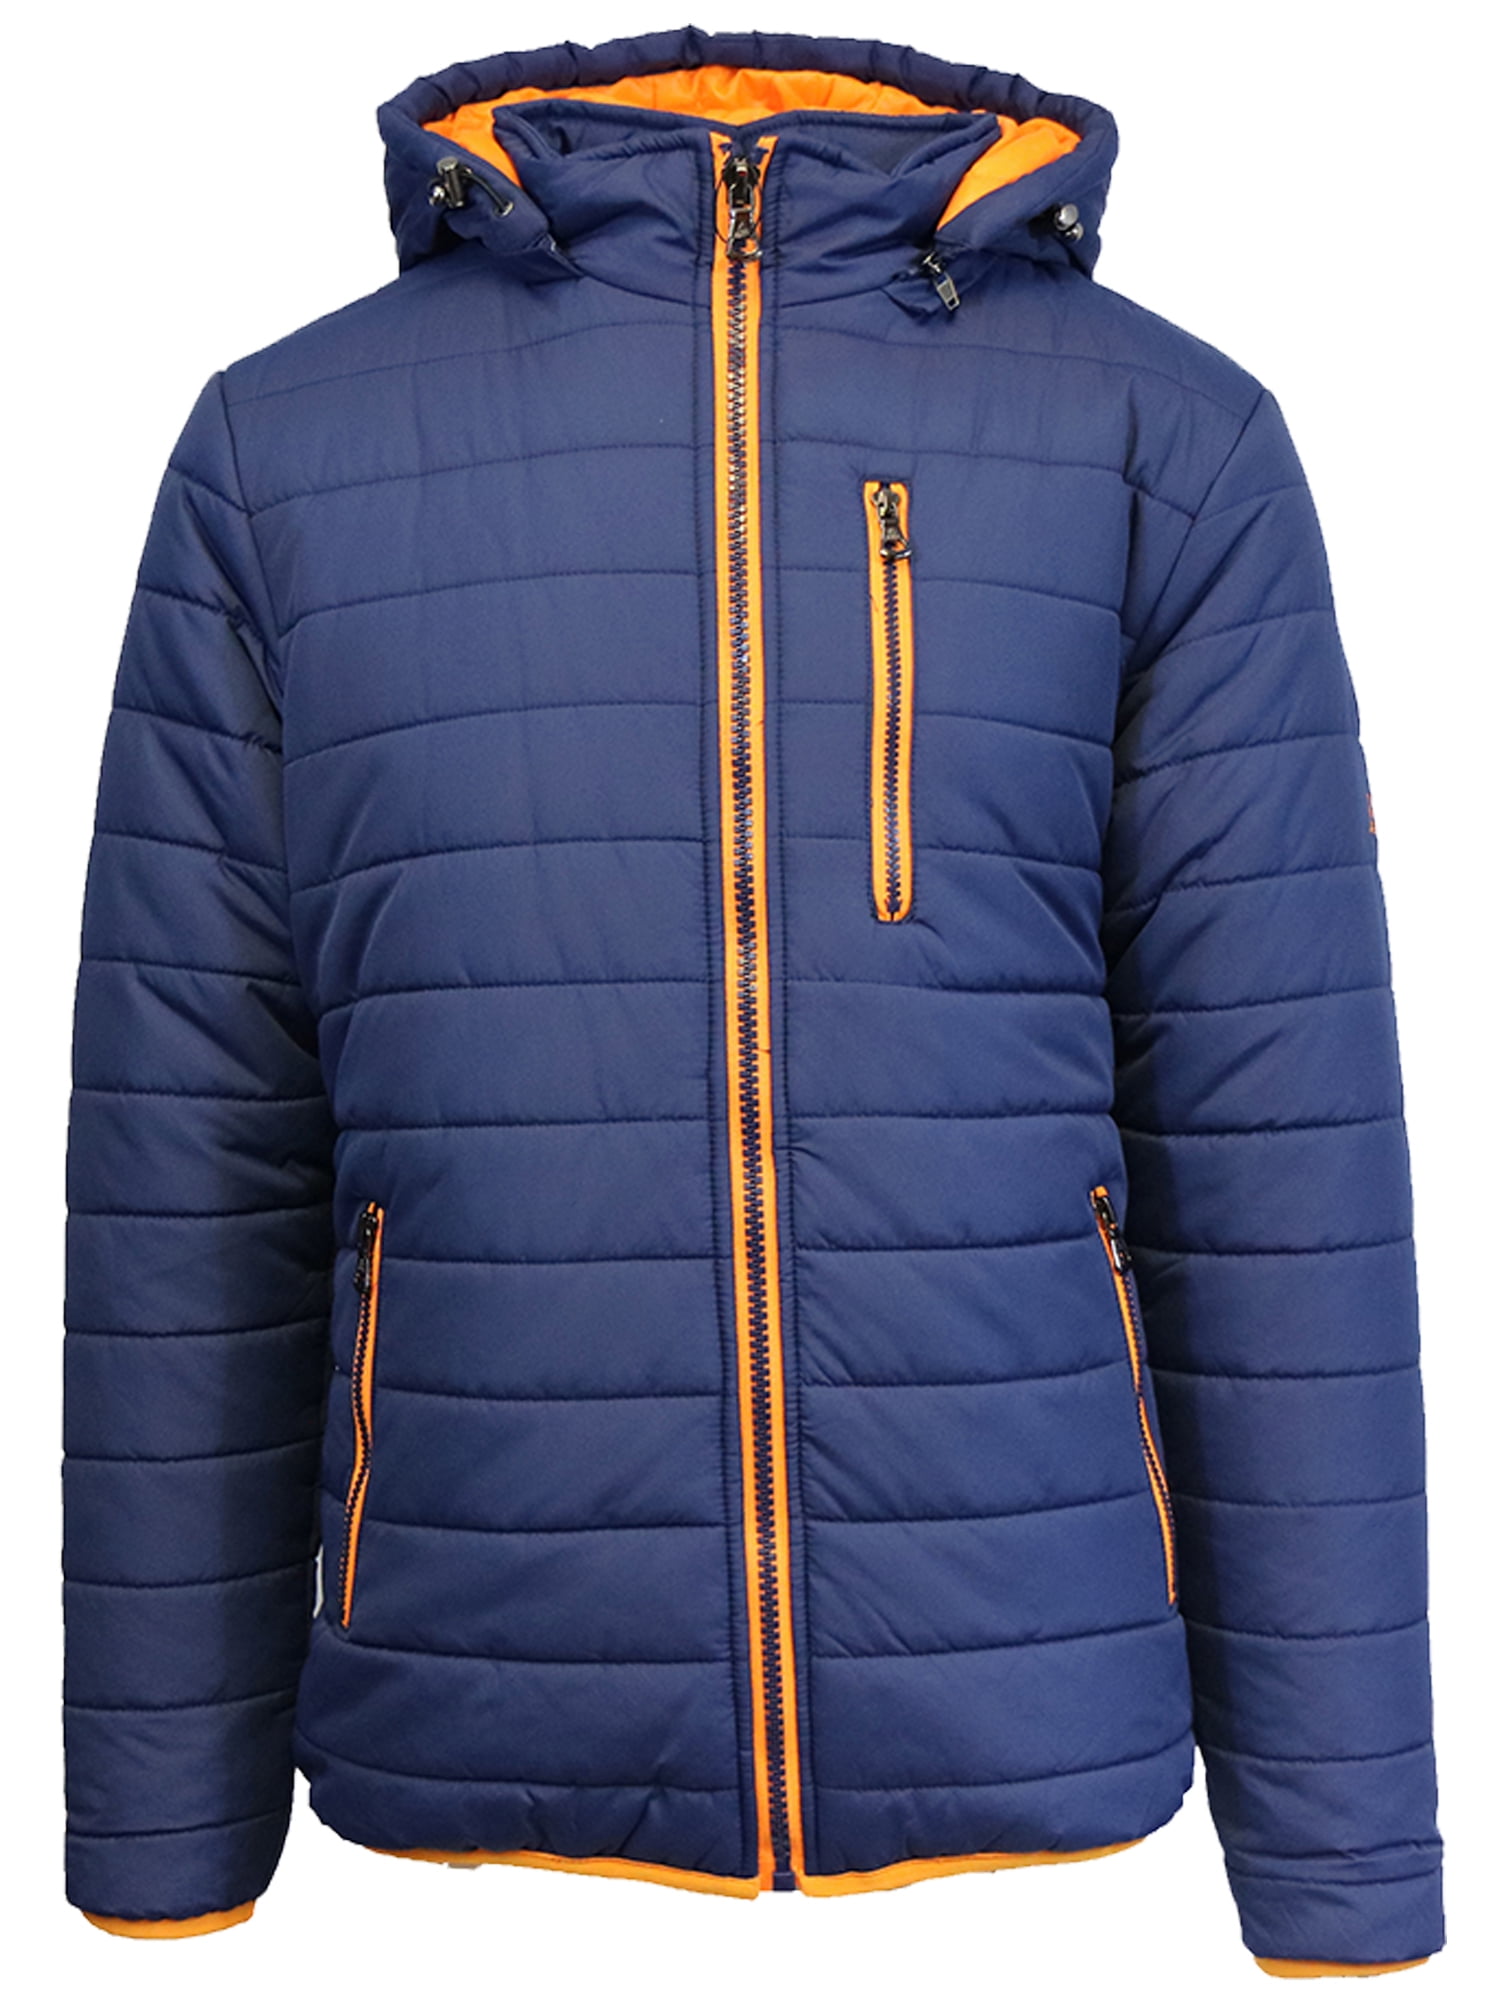 Boy's Heavy Puffer Jacket Coat With Detachable Hood - Walmart.com